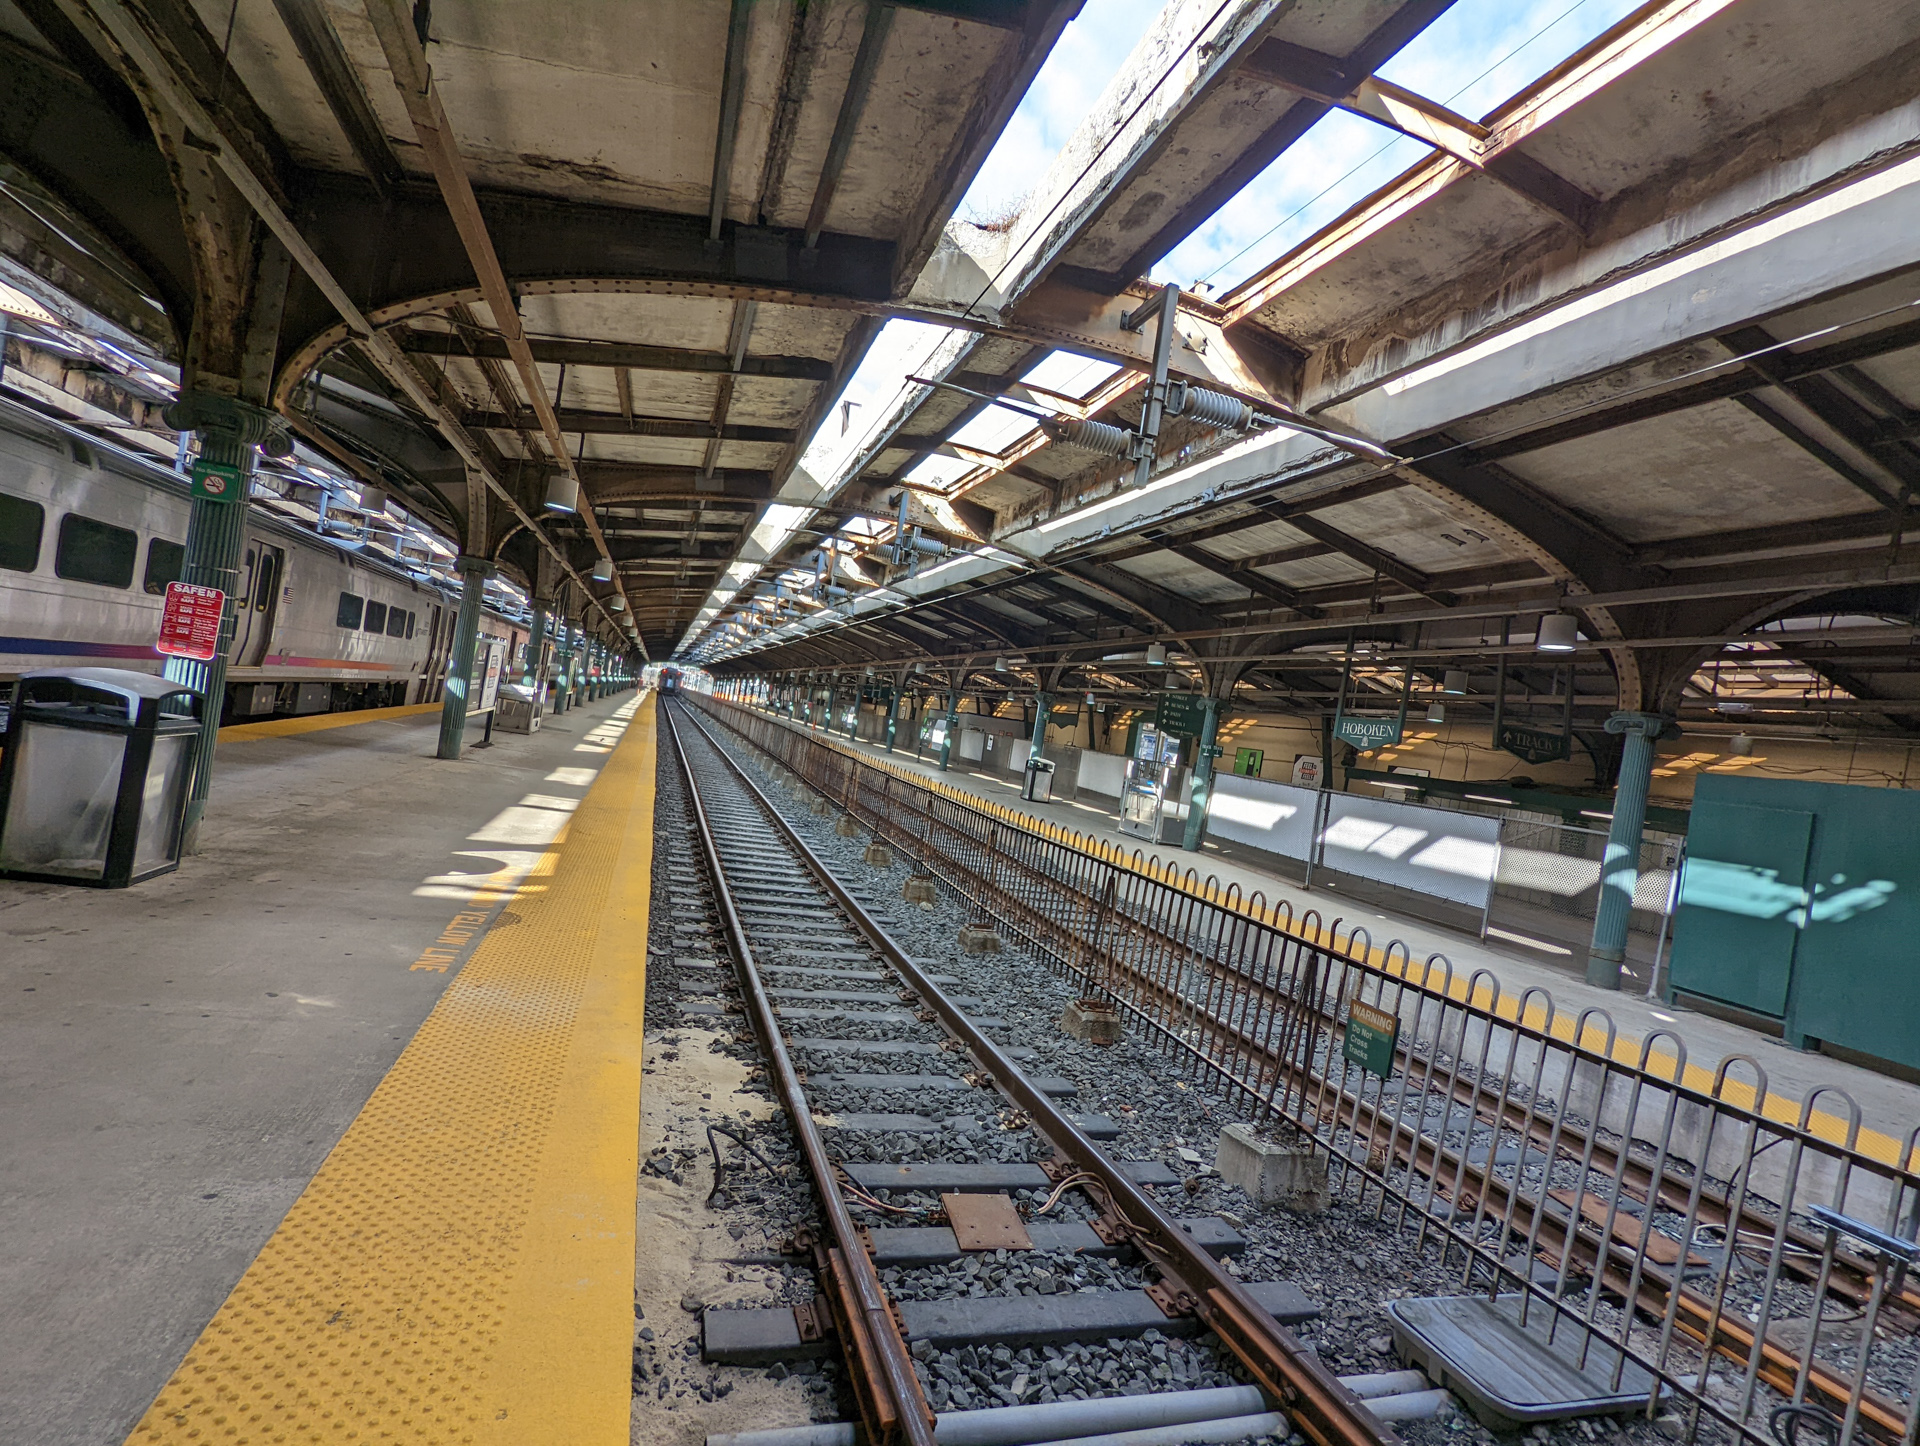 Google Pixel 6 Pro camera sample train station wide angle 2